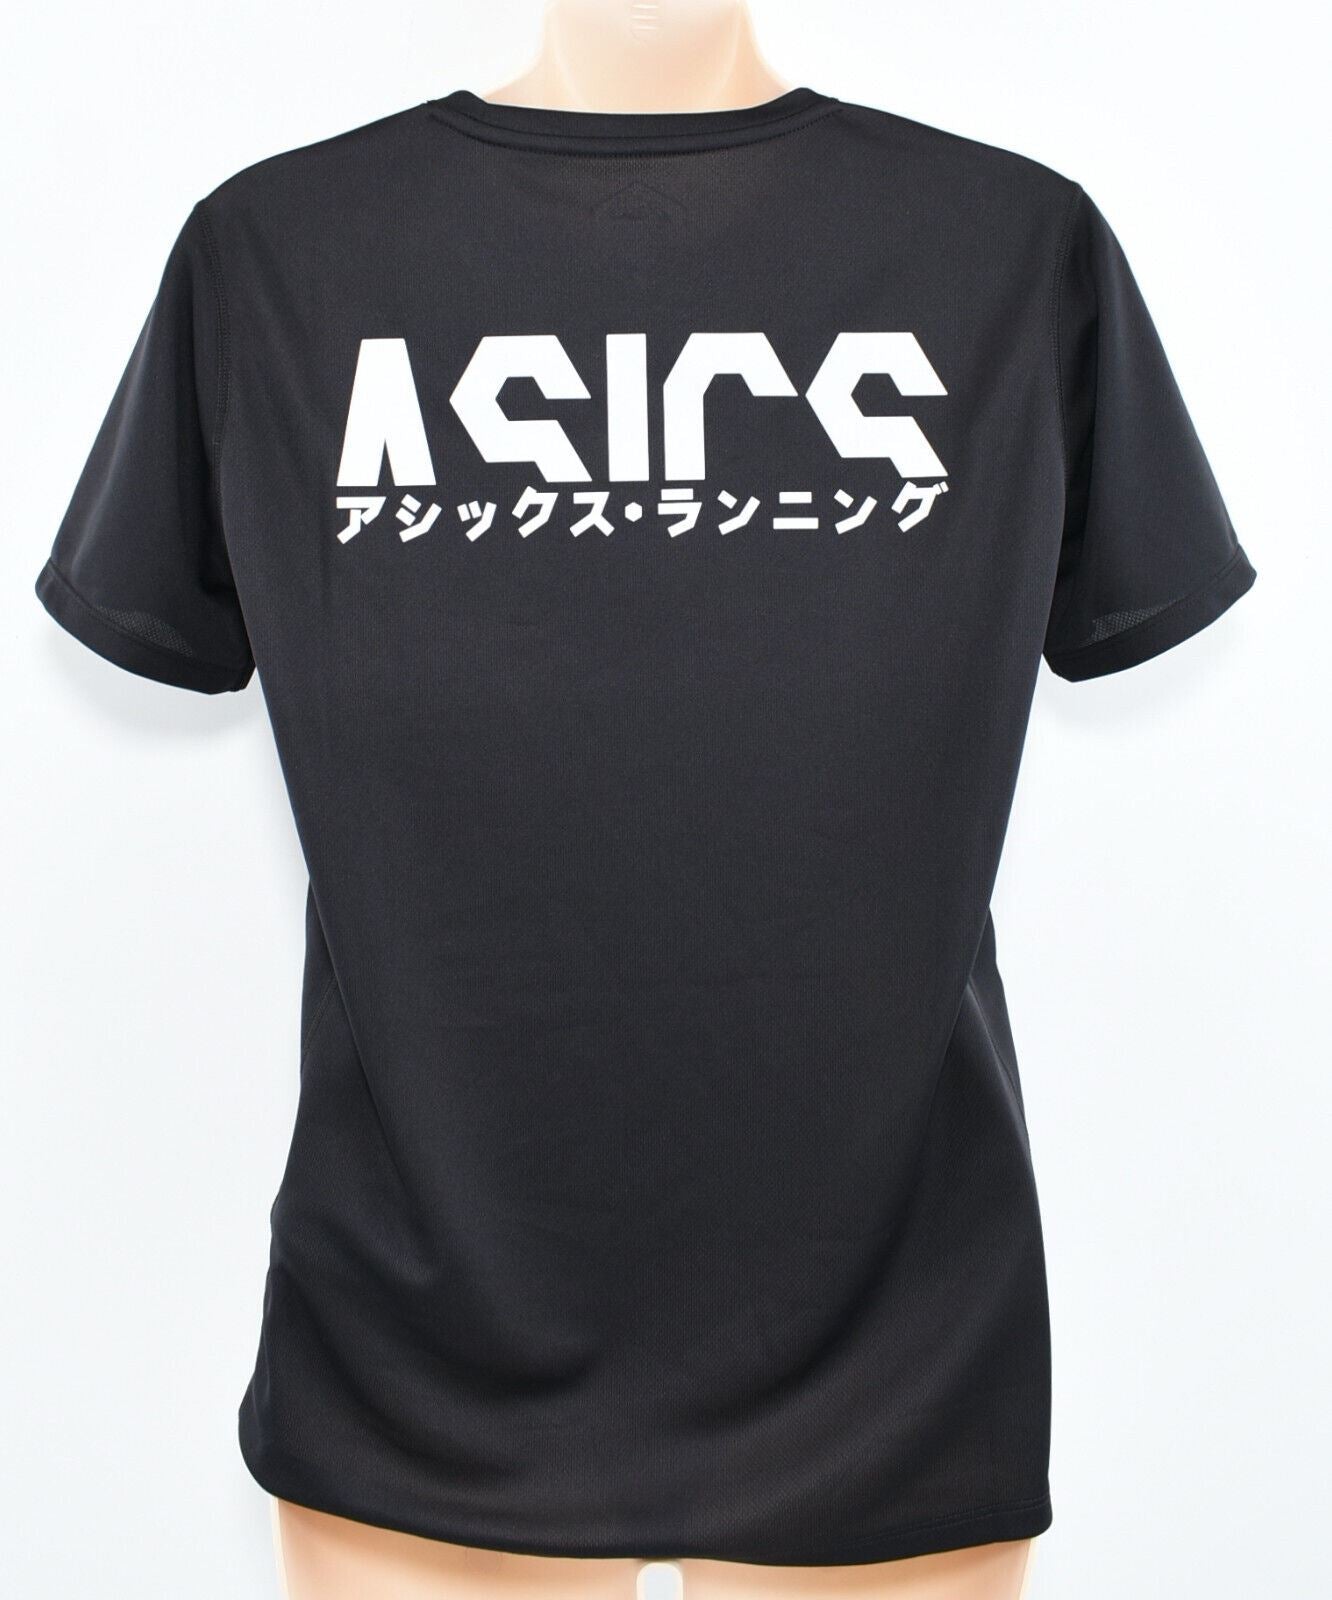 ASICS Women's KATAKANA Short Sleeve Running Top, Black, size S /UK 10